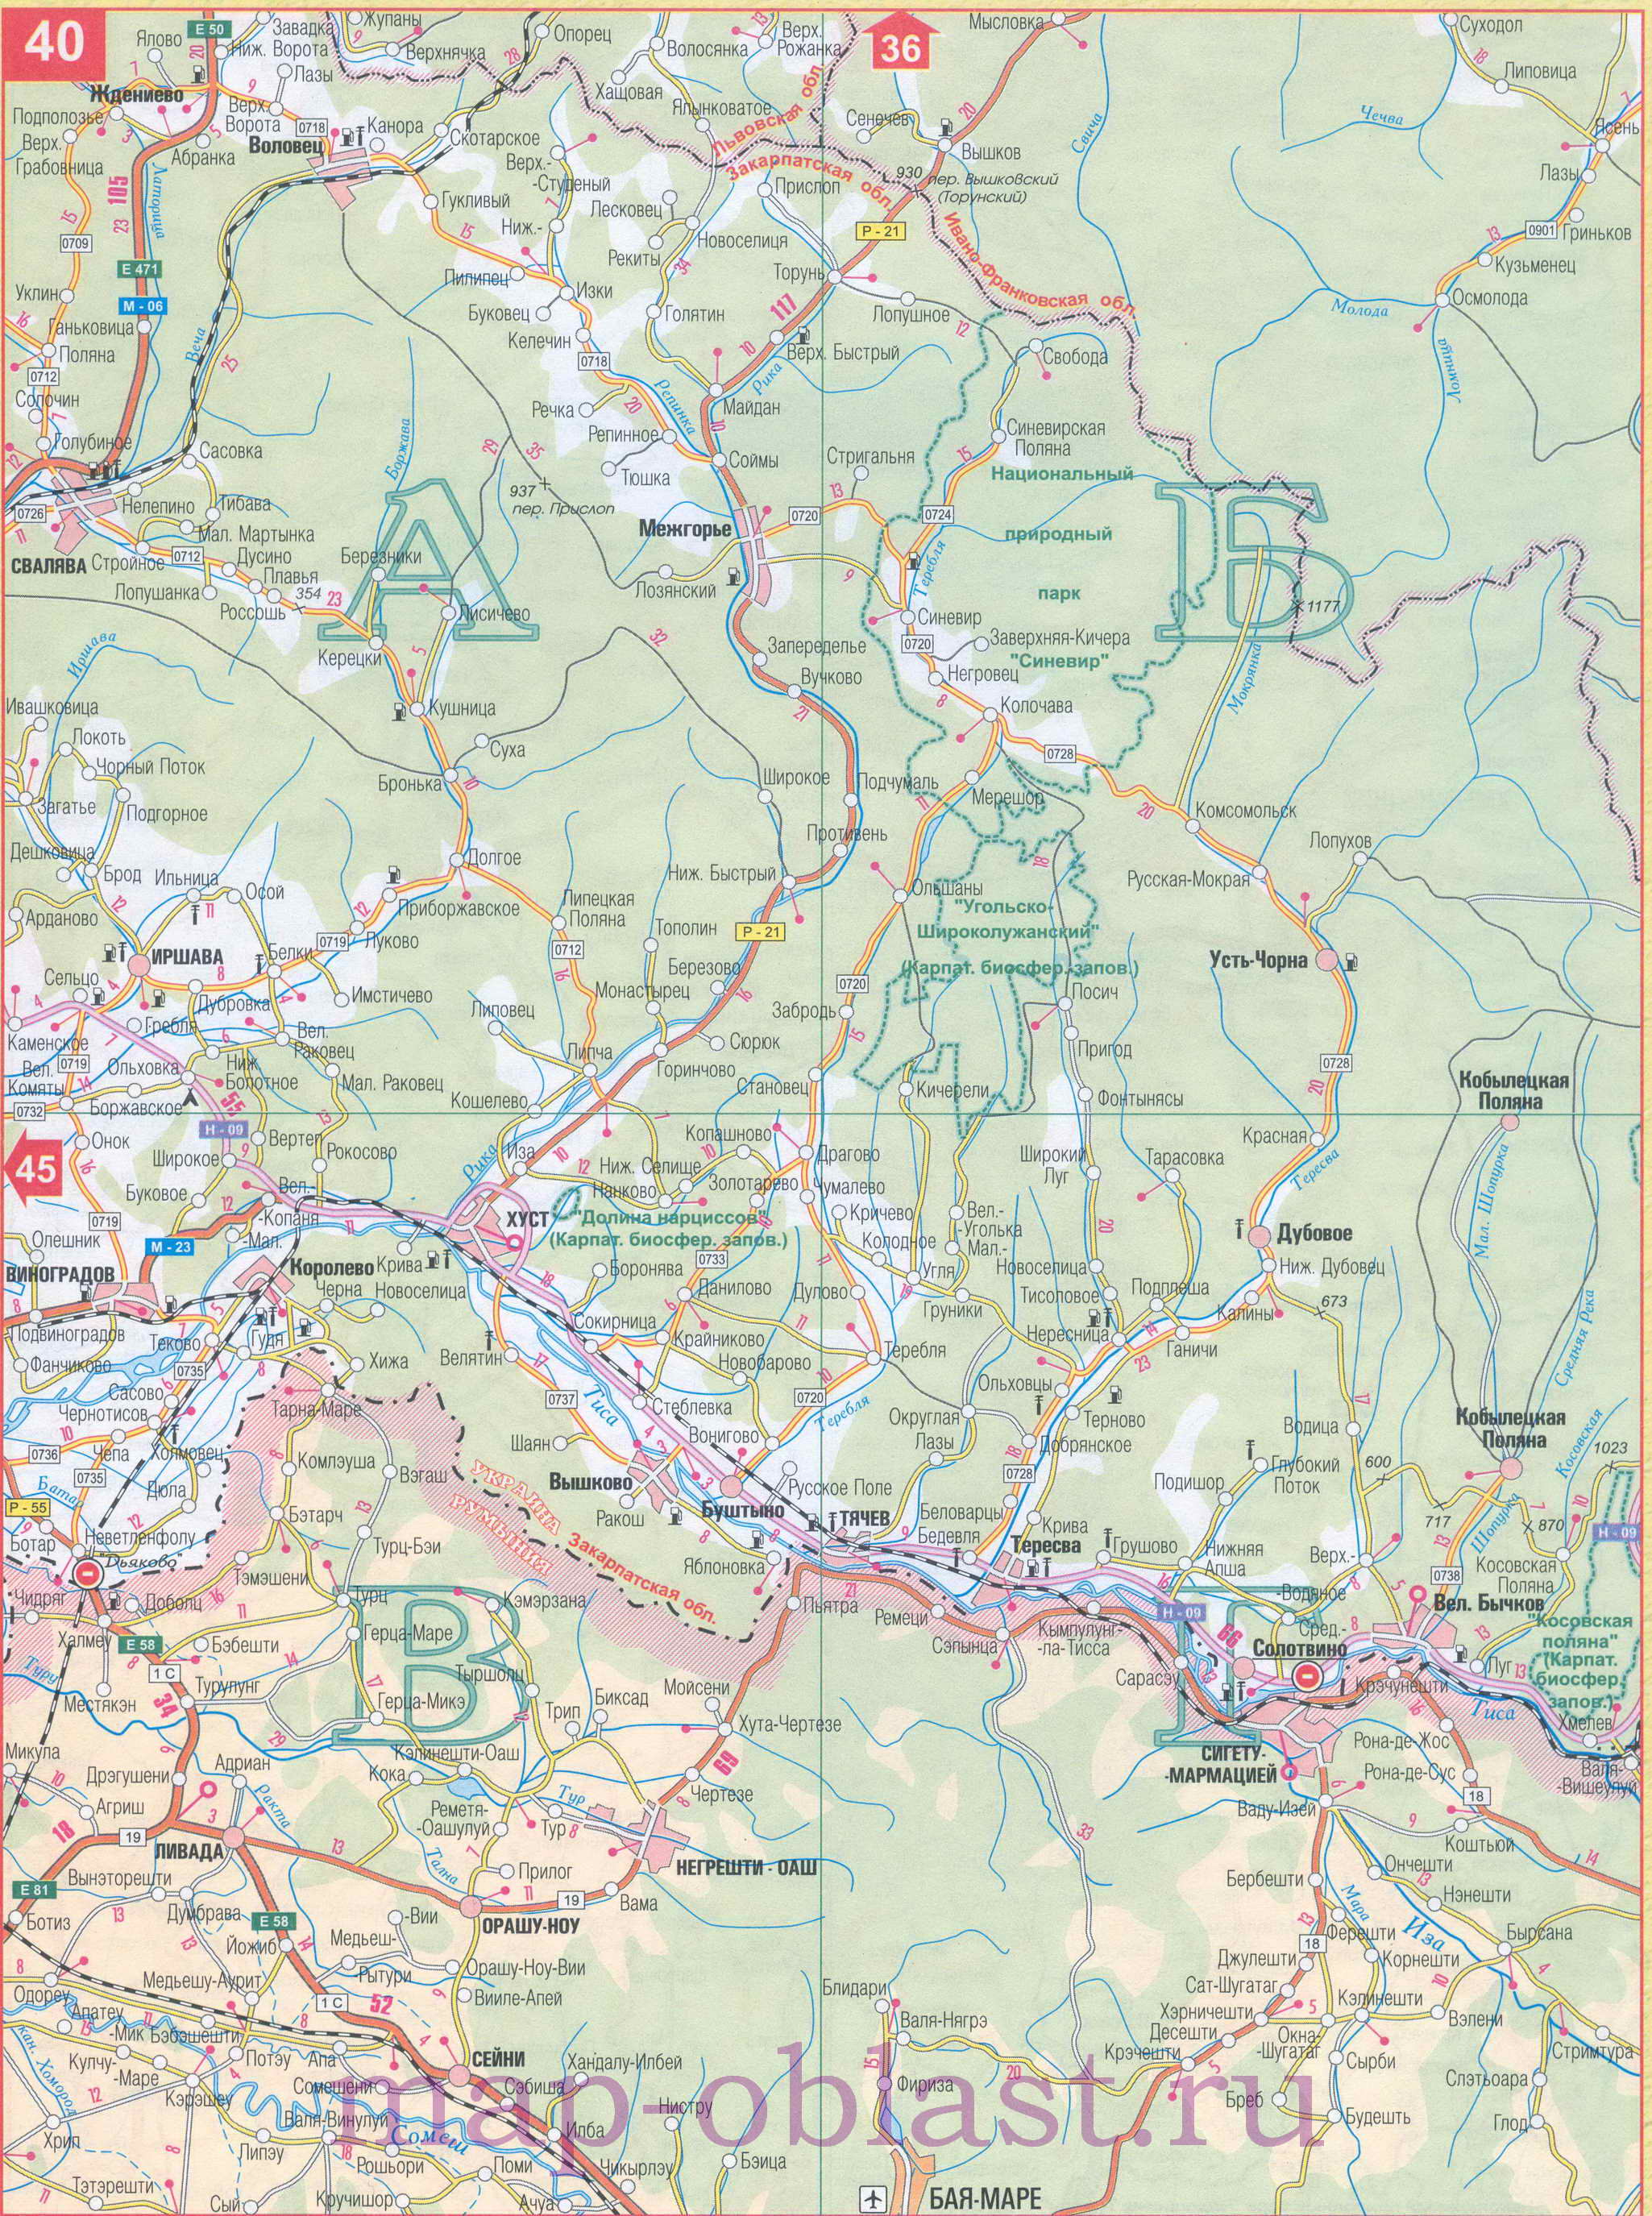 Карта дорог запада Украины - Закарпатская область. Подробная автомобильная карта Закарпатской области, B1 - 